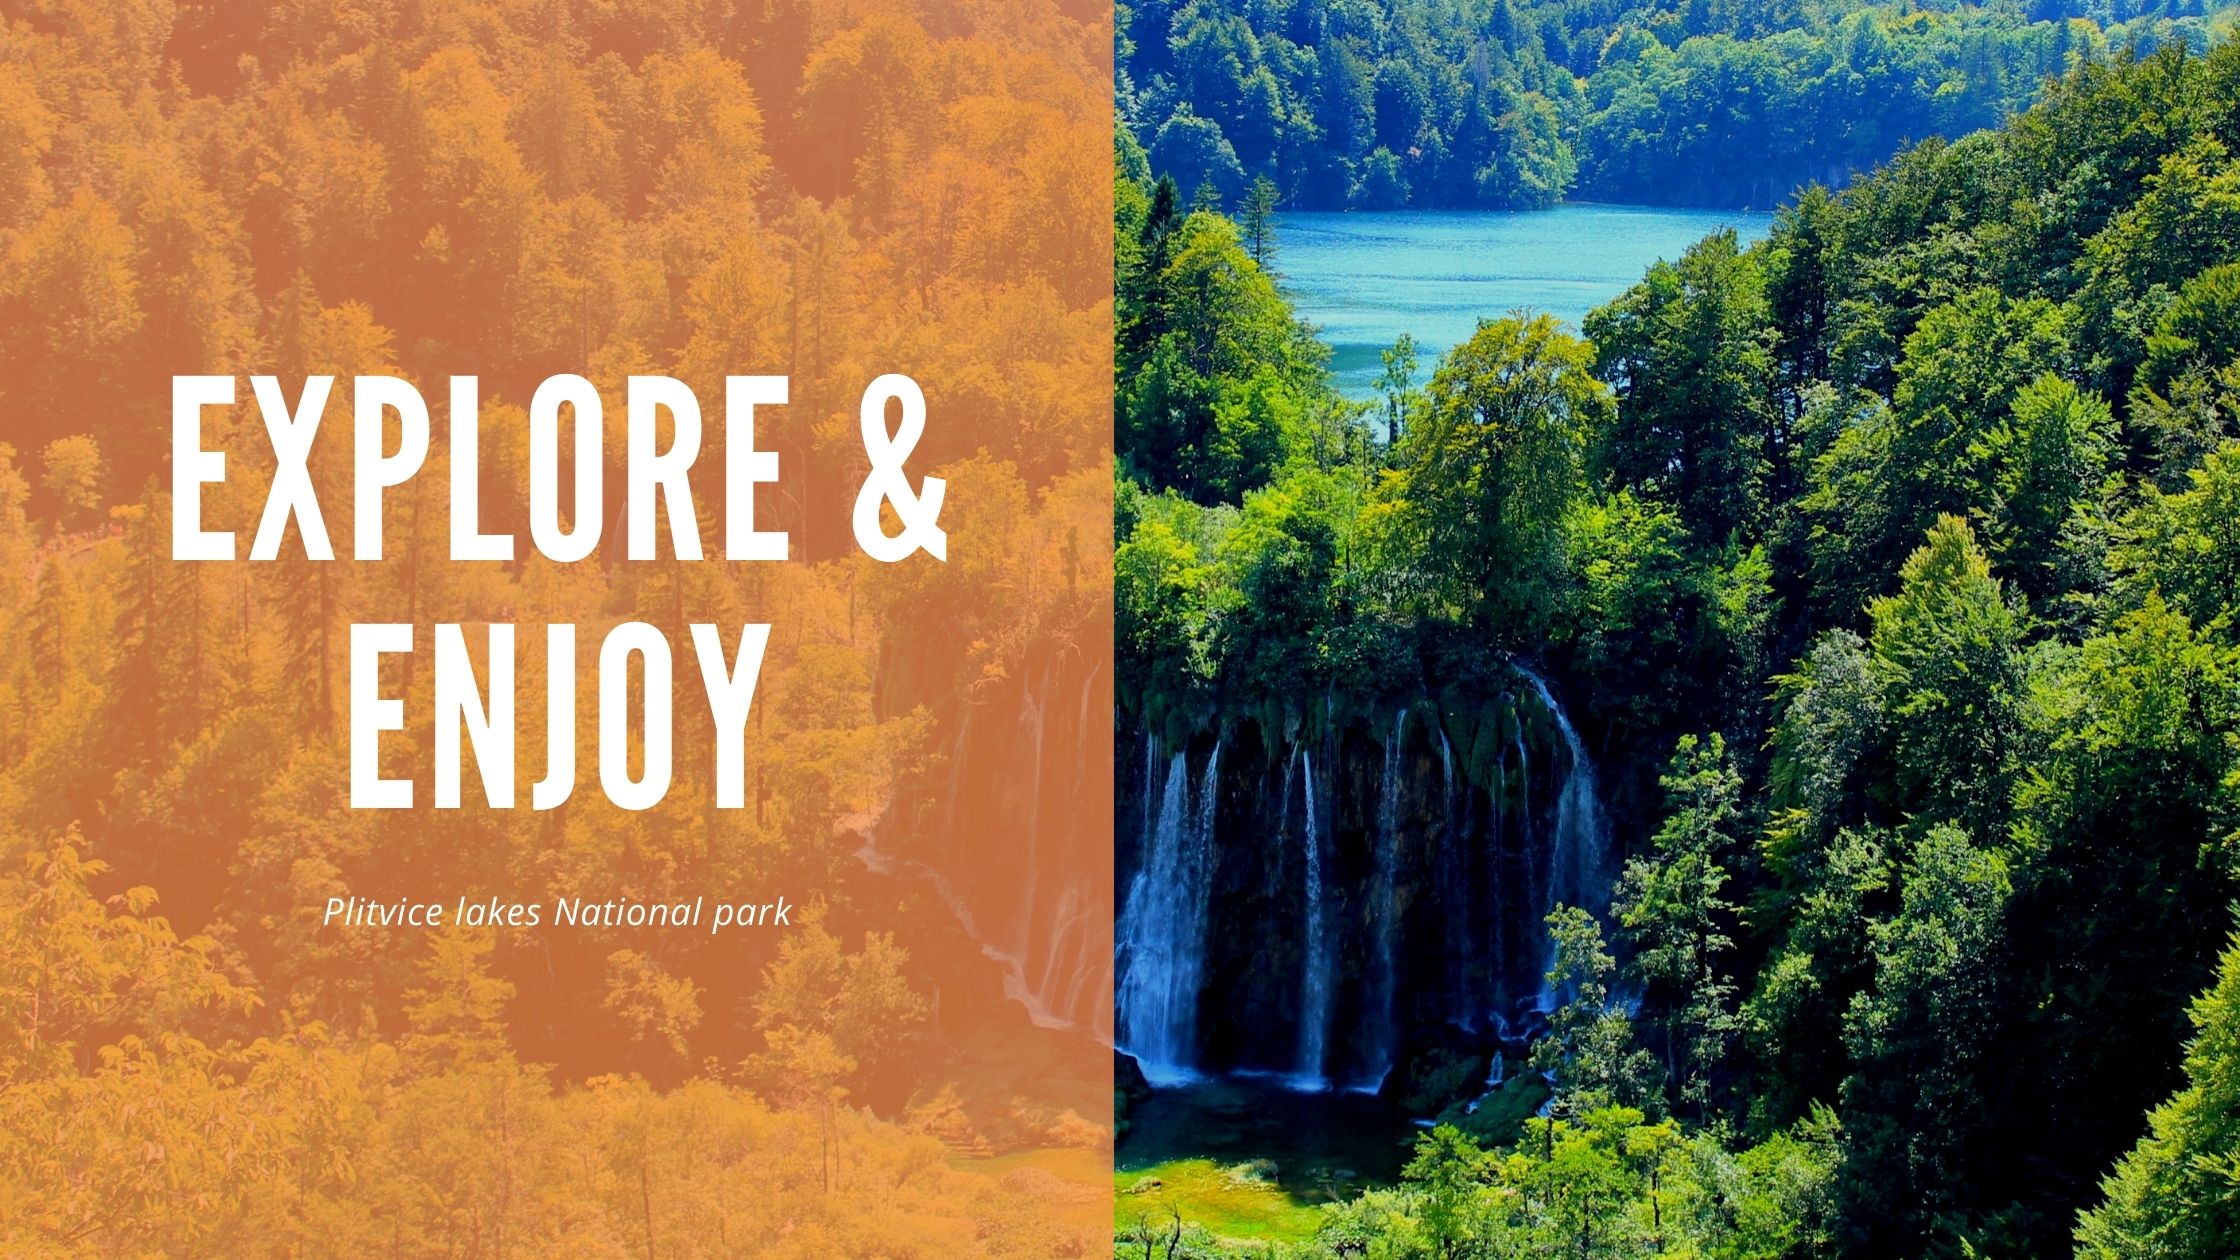 Plitvice lakes group tour from Split